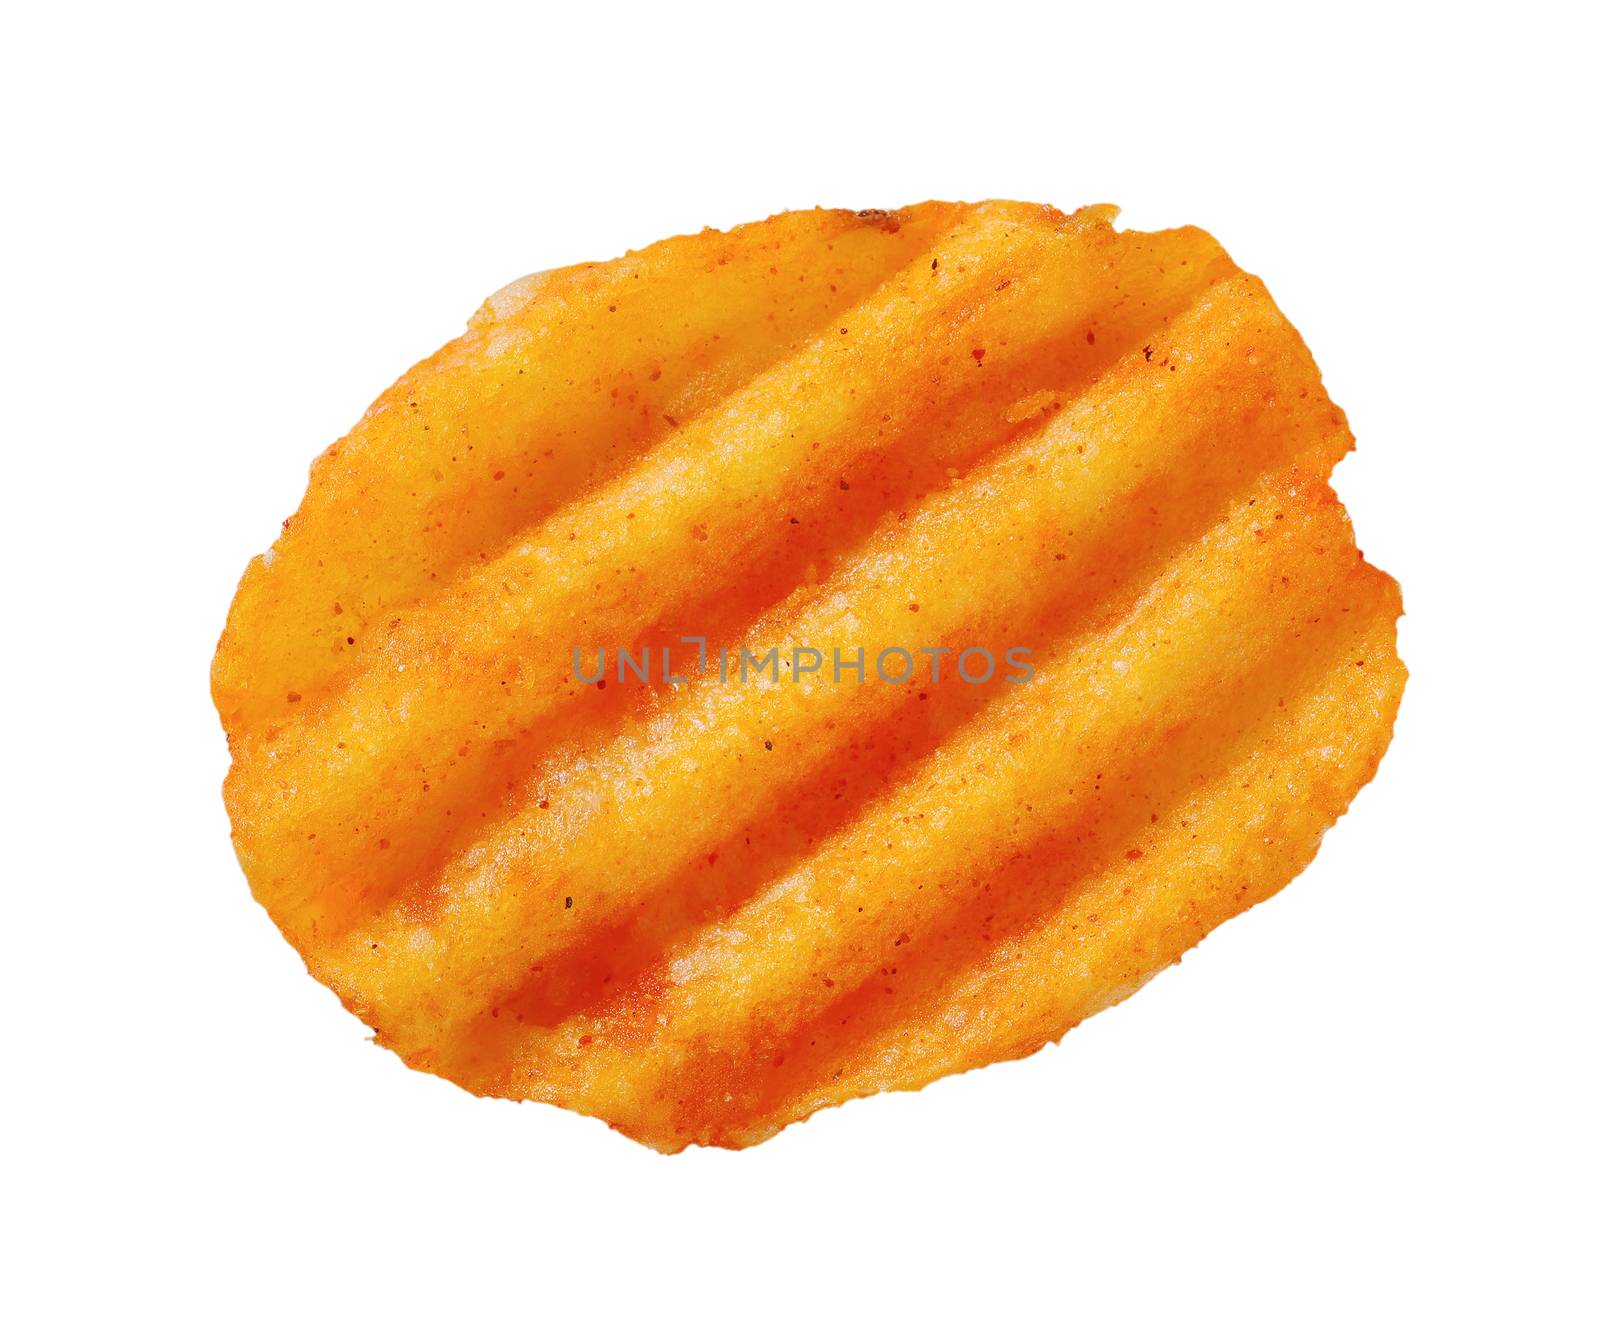 fried potato chip by Digifoodstock